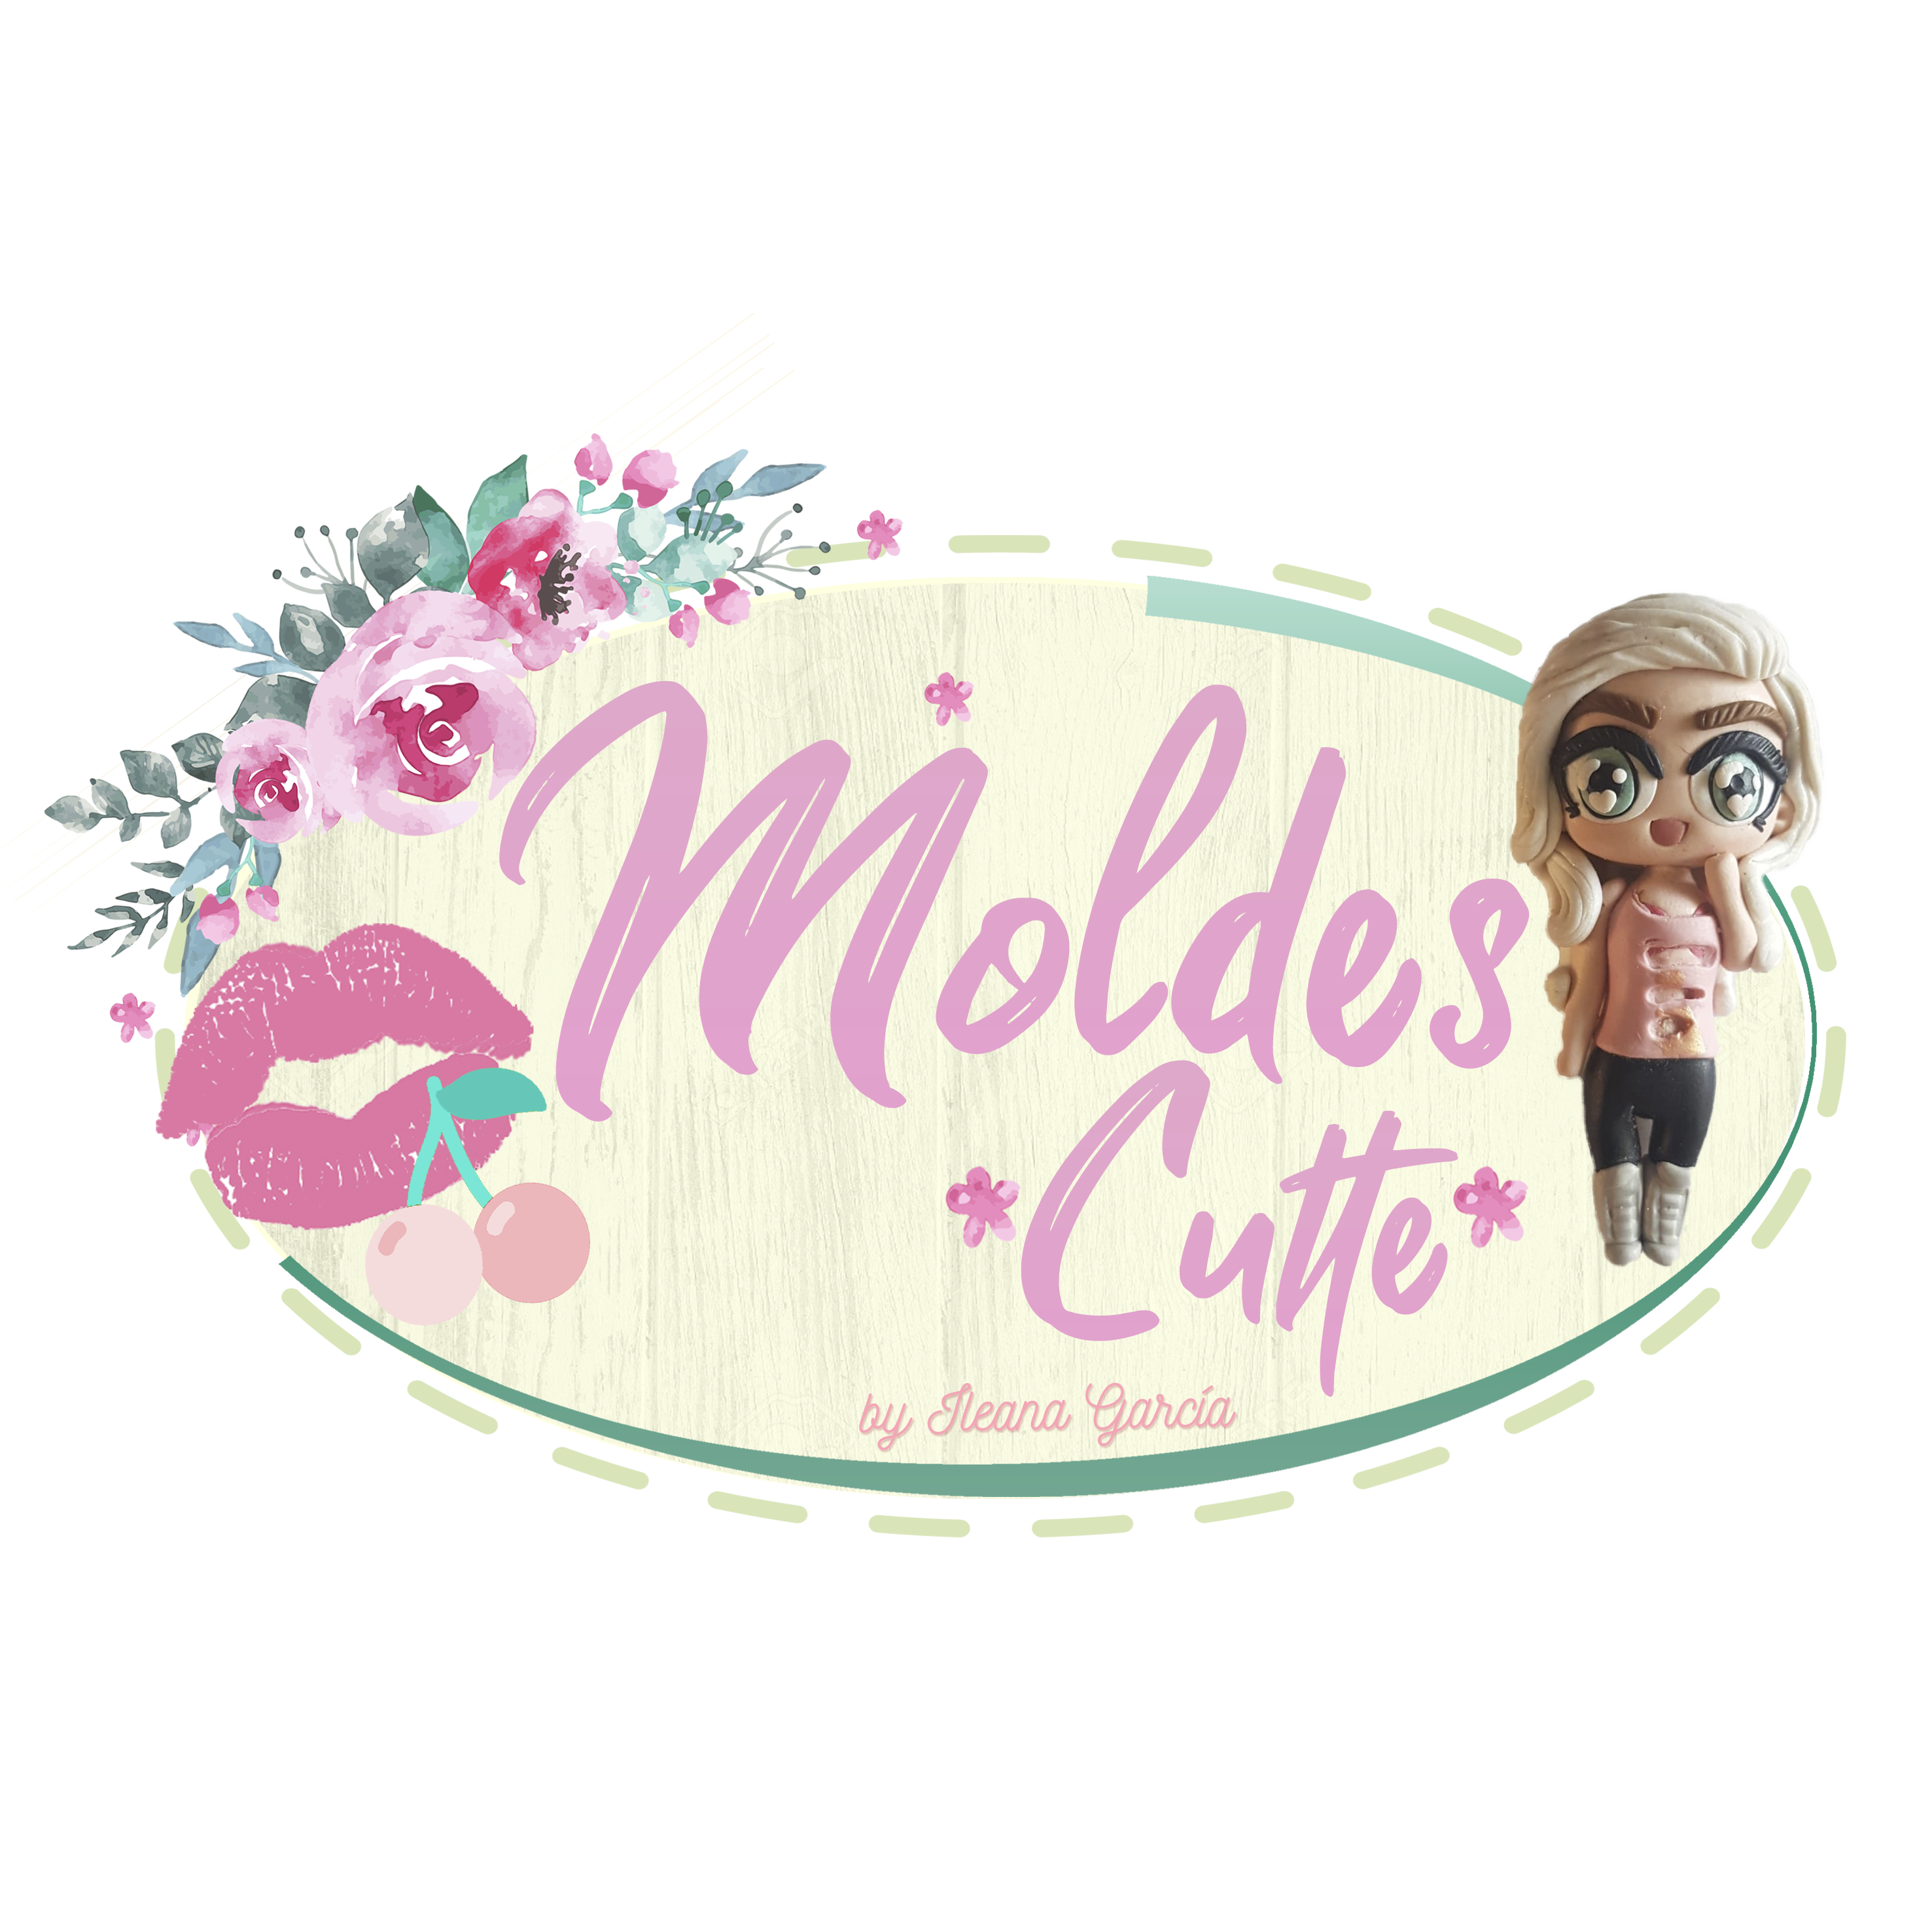 Moldes Cutte